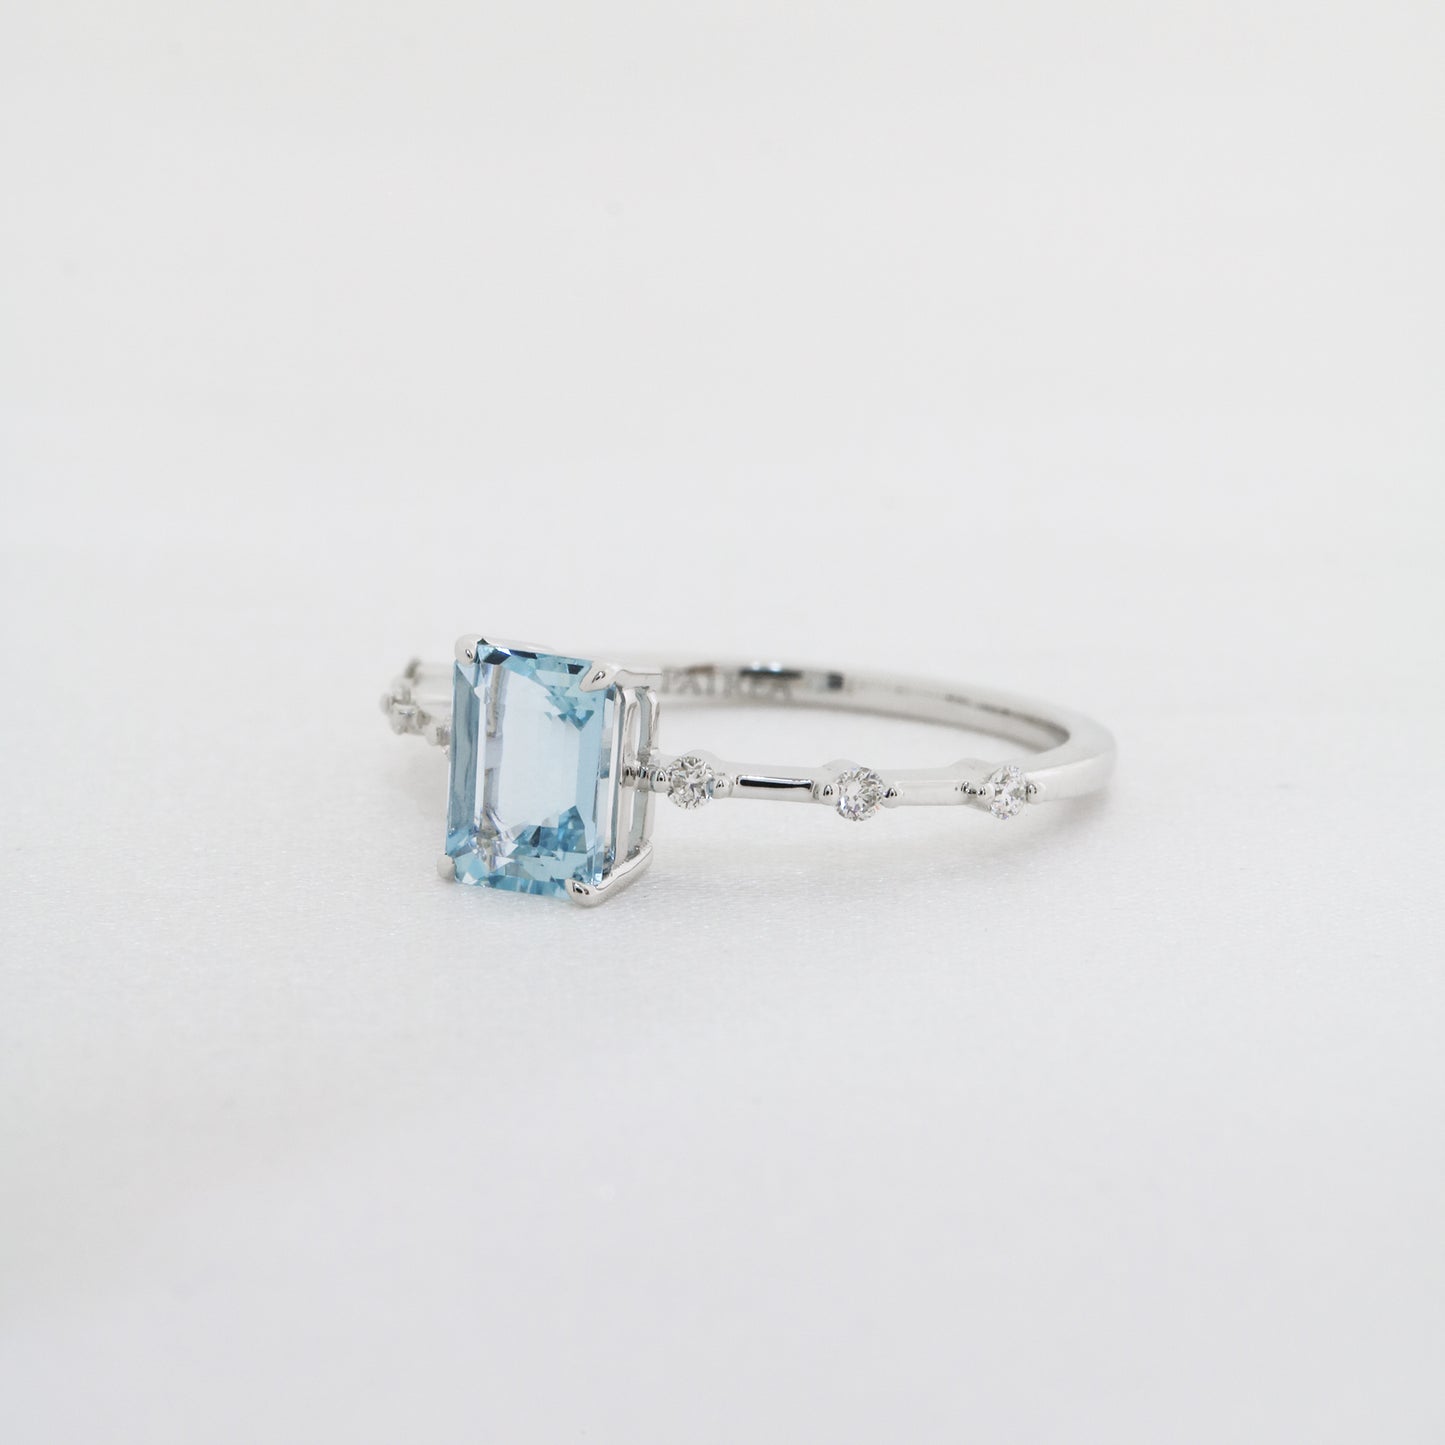  18k白金海藍寶鑽石戒指側面 18k White Gold Emerald-cut Aquamarine Diamond Ring on side view